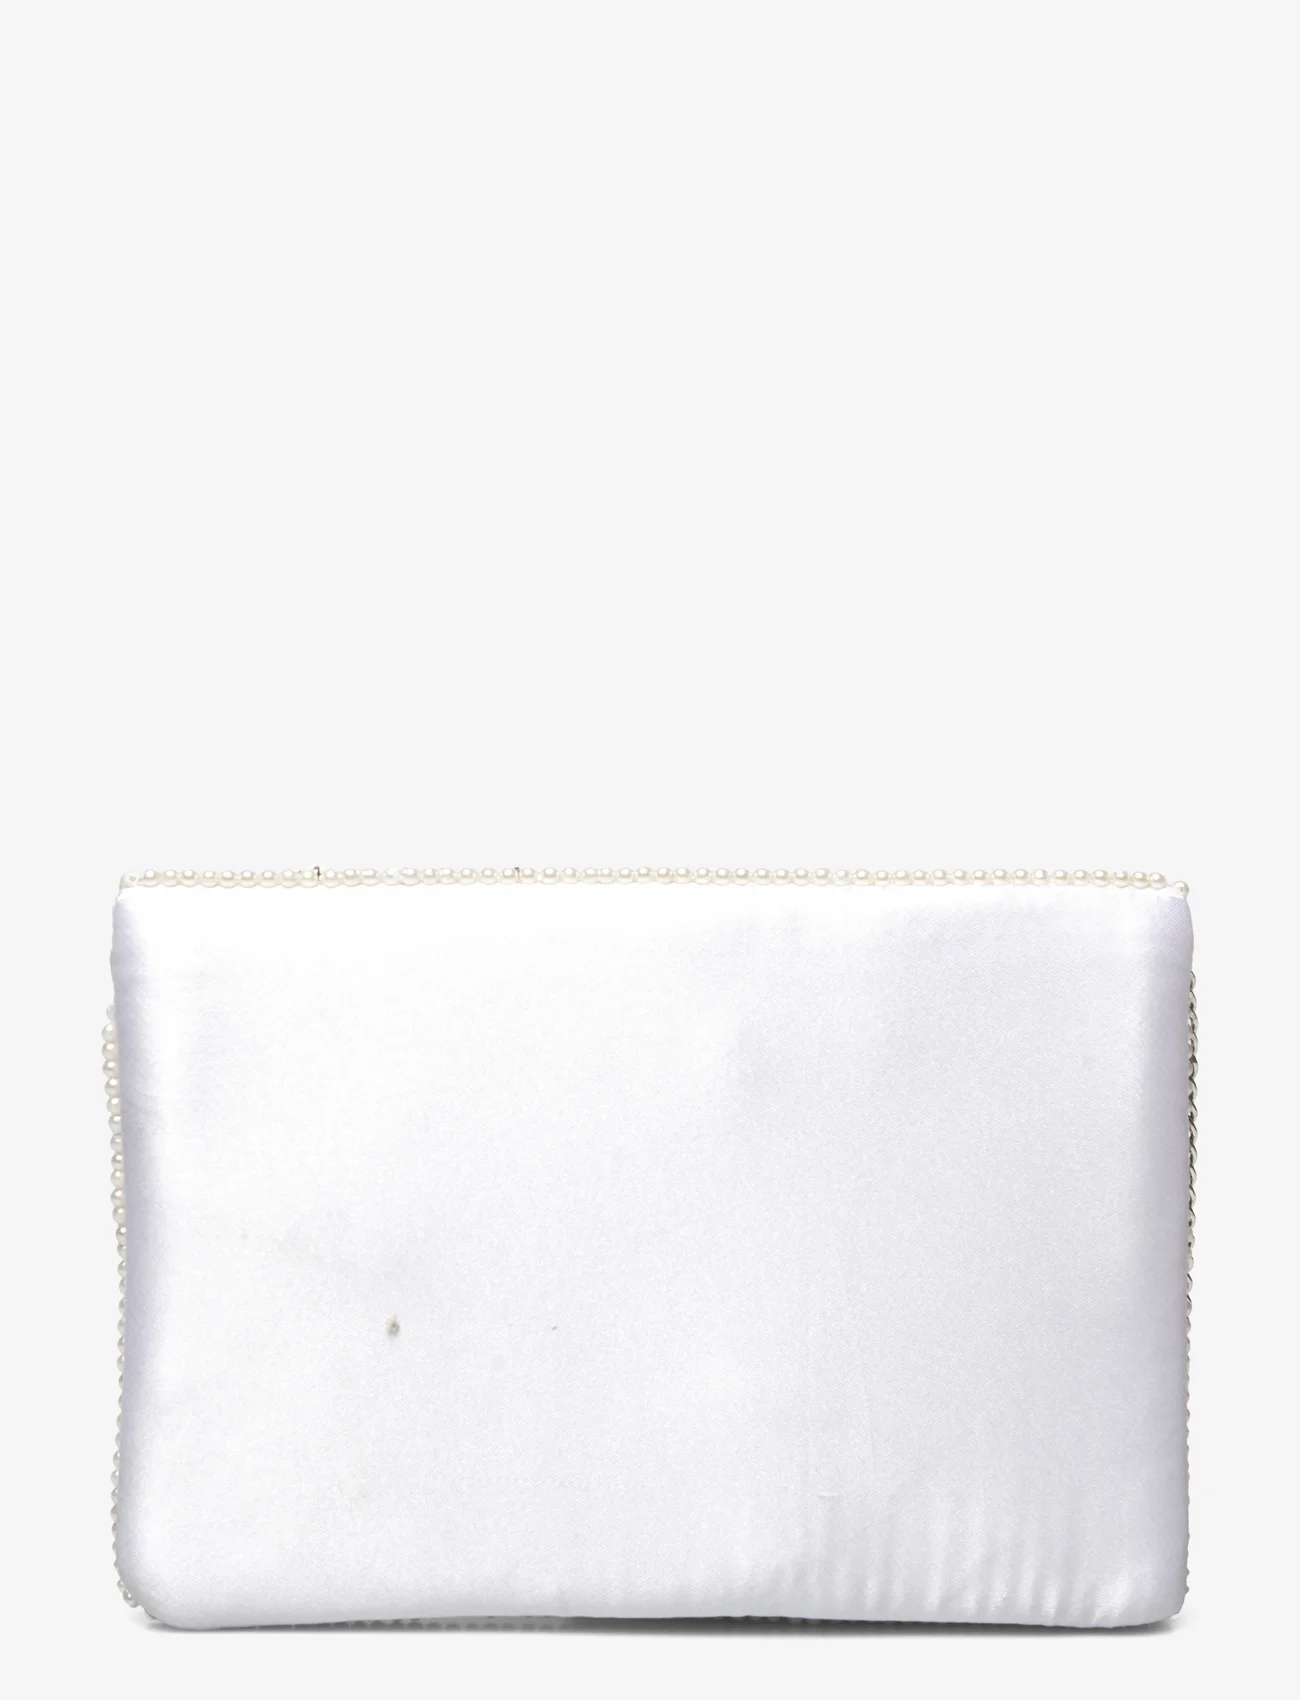 Pipol's Bazaar - Amorella Clutch White - ballīšu apģērbs par outlet cenām - white - 1